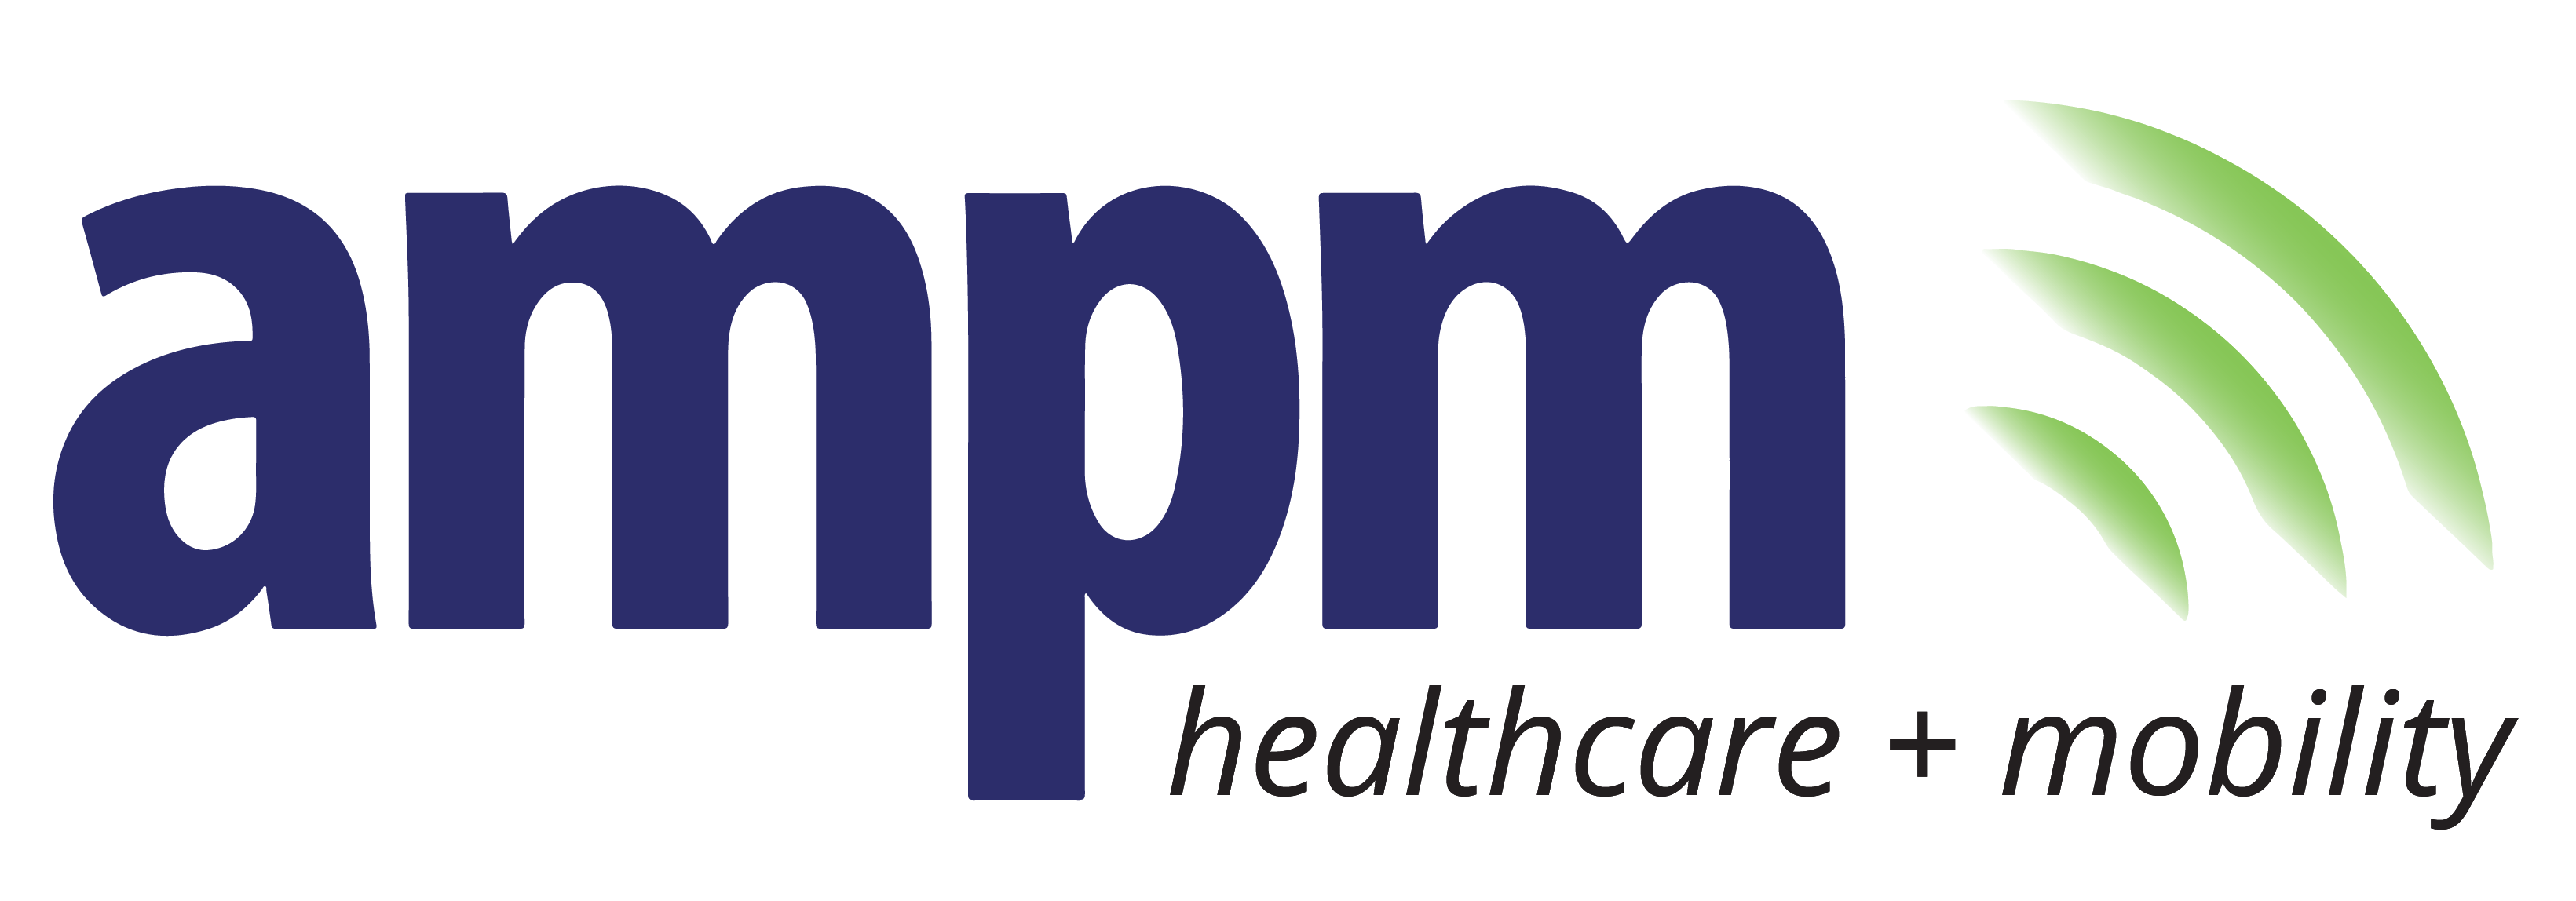 Ampm Logo